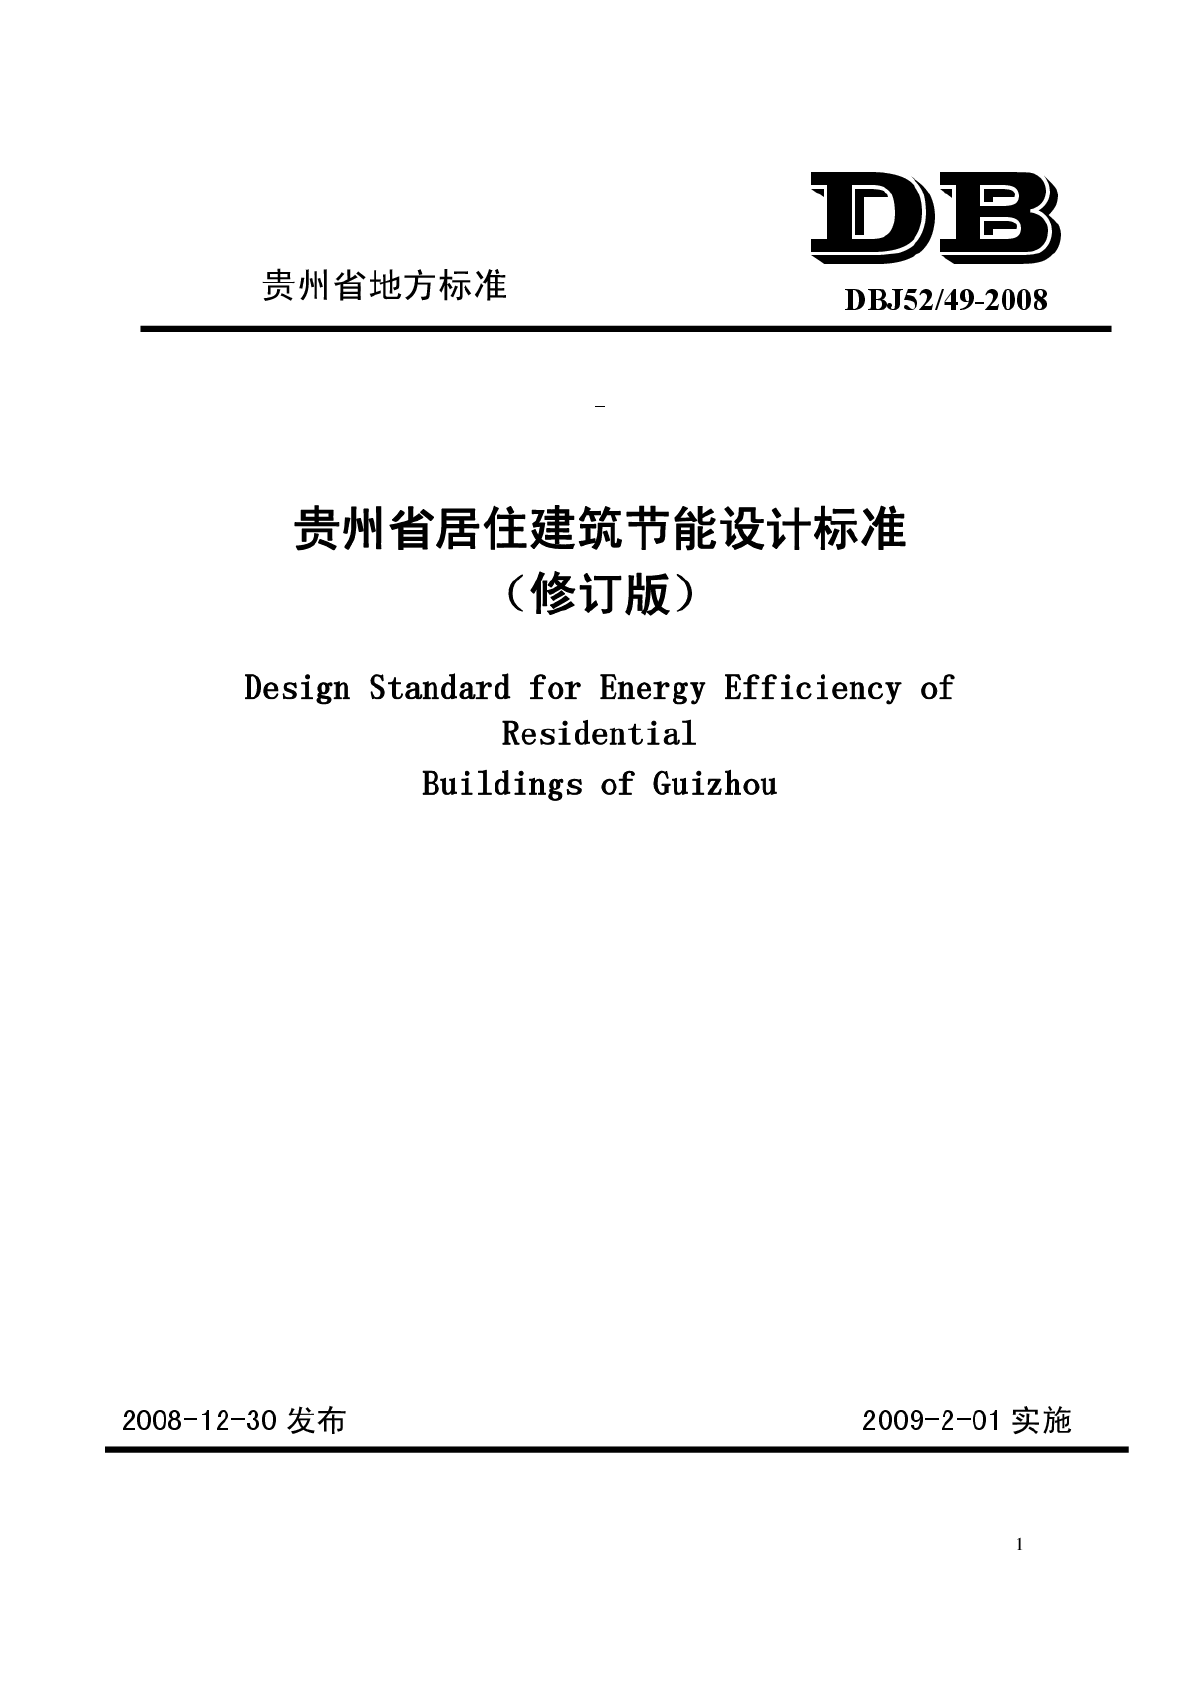 DBJ52-49-2008 贵州省居住建筑节能设计标准-图一